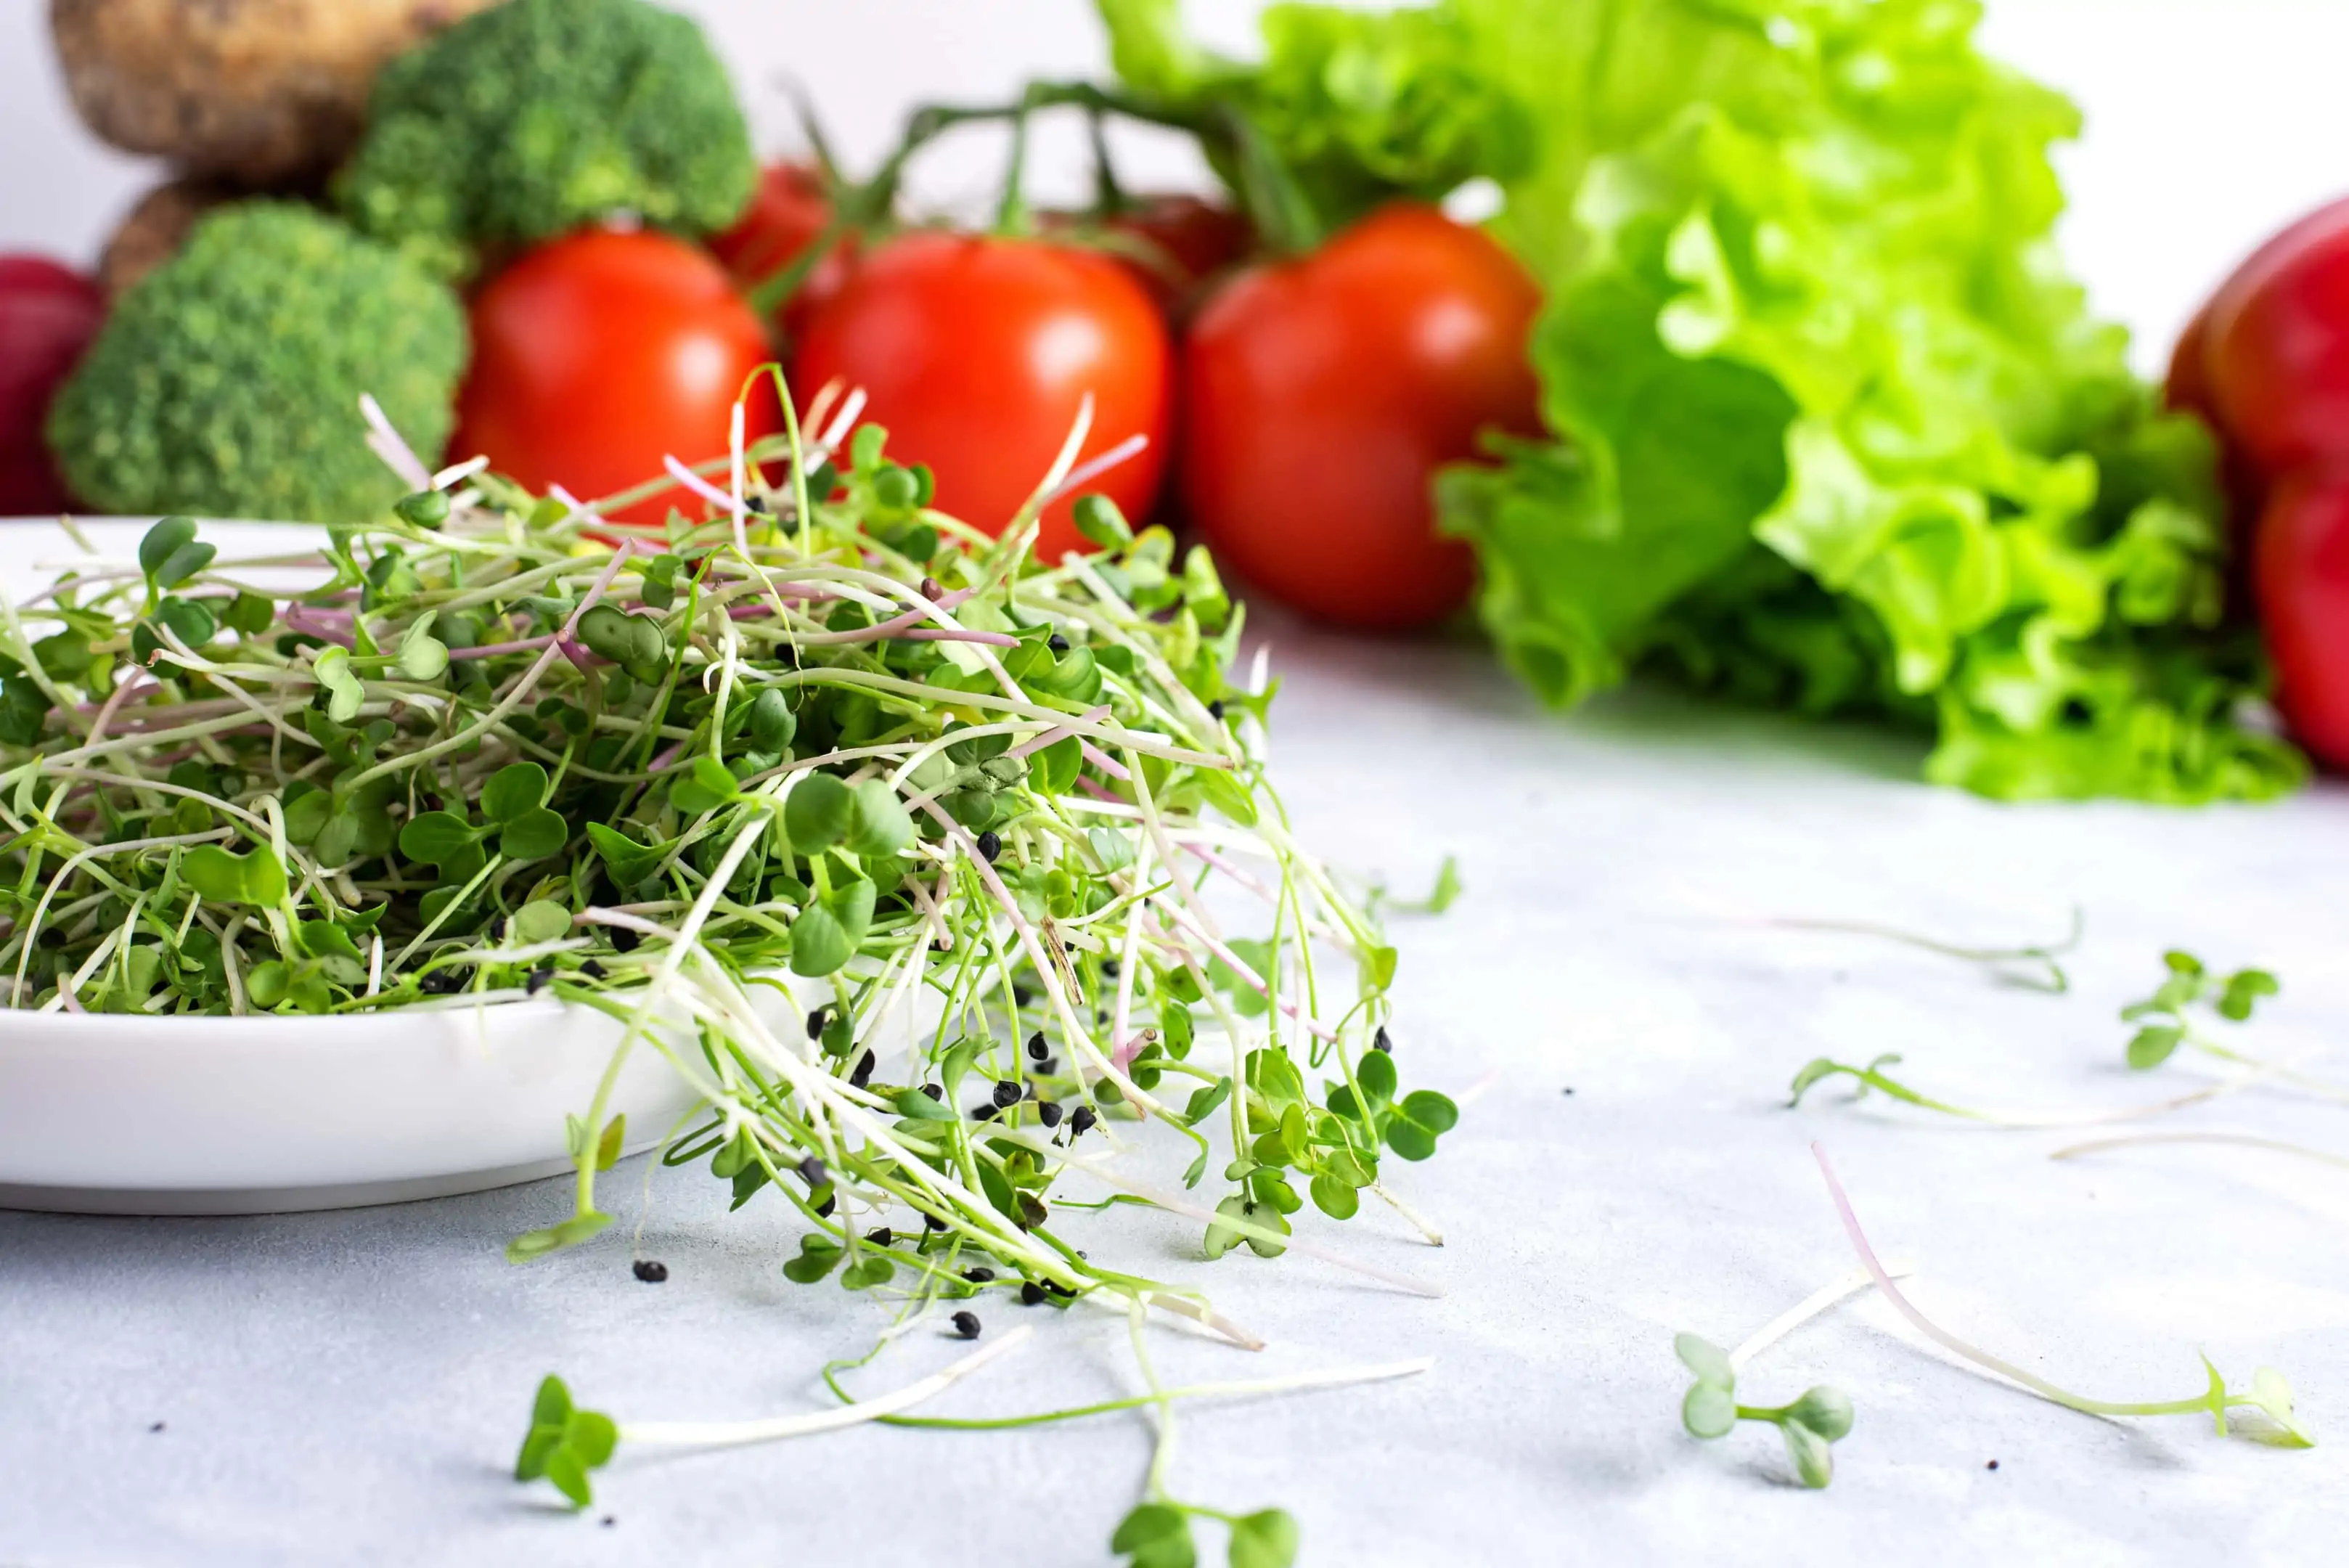 Fenugreek microgreens with vegetables assortment